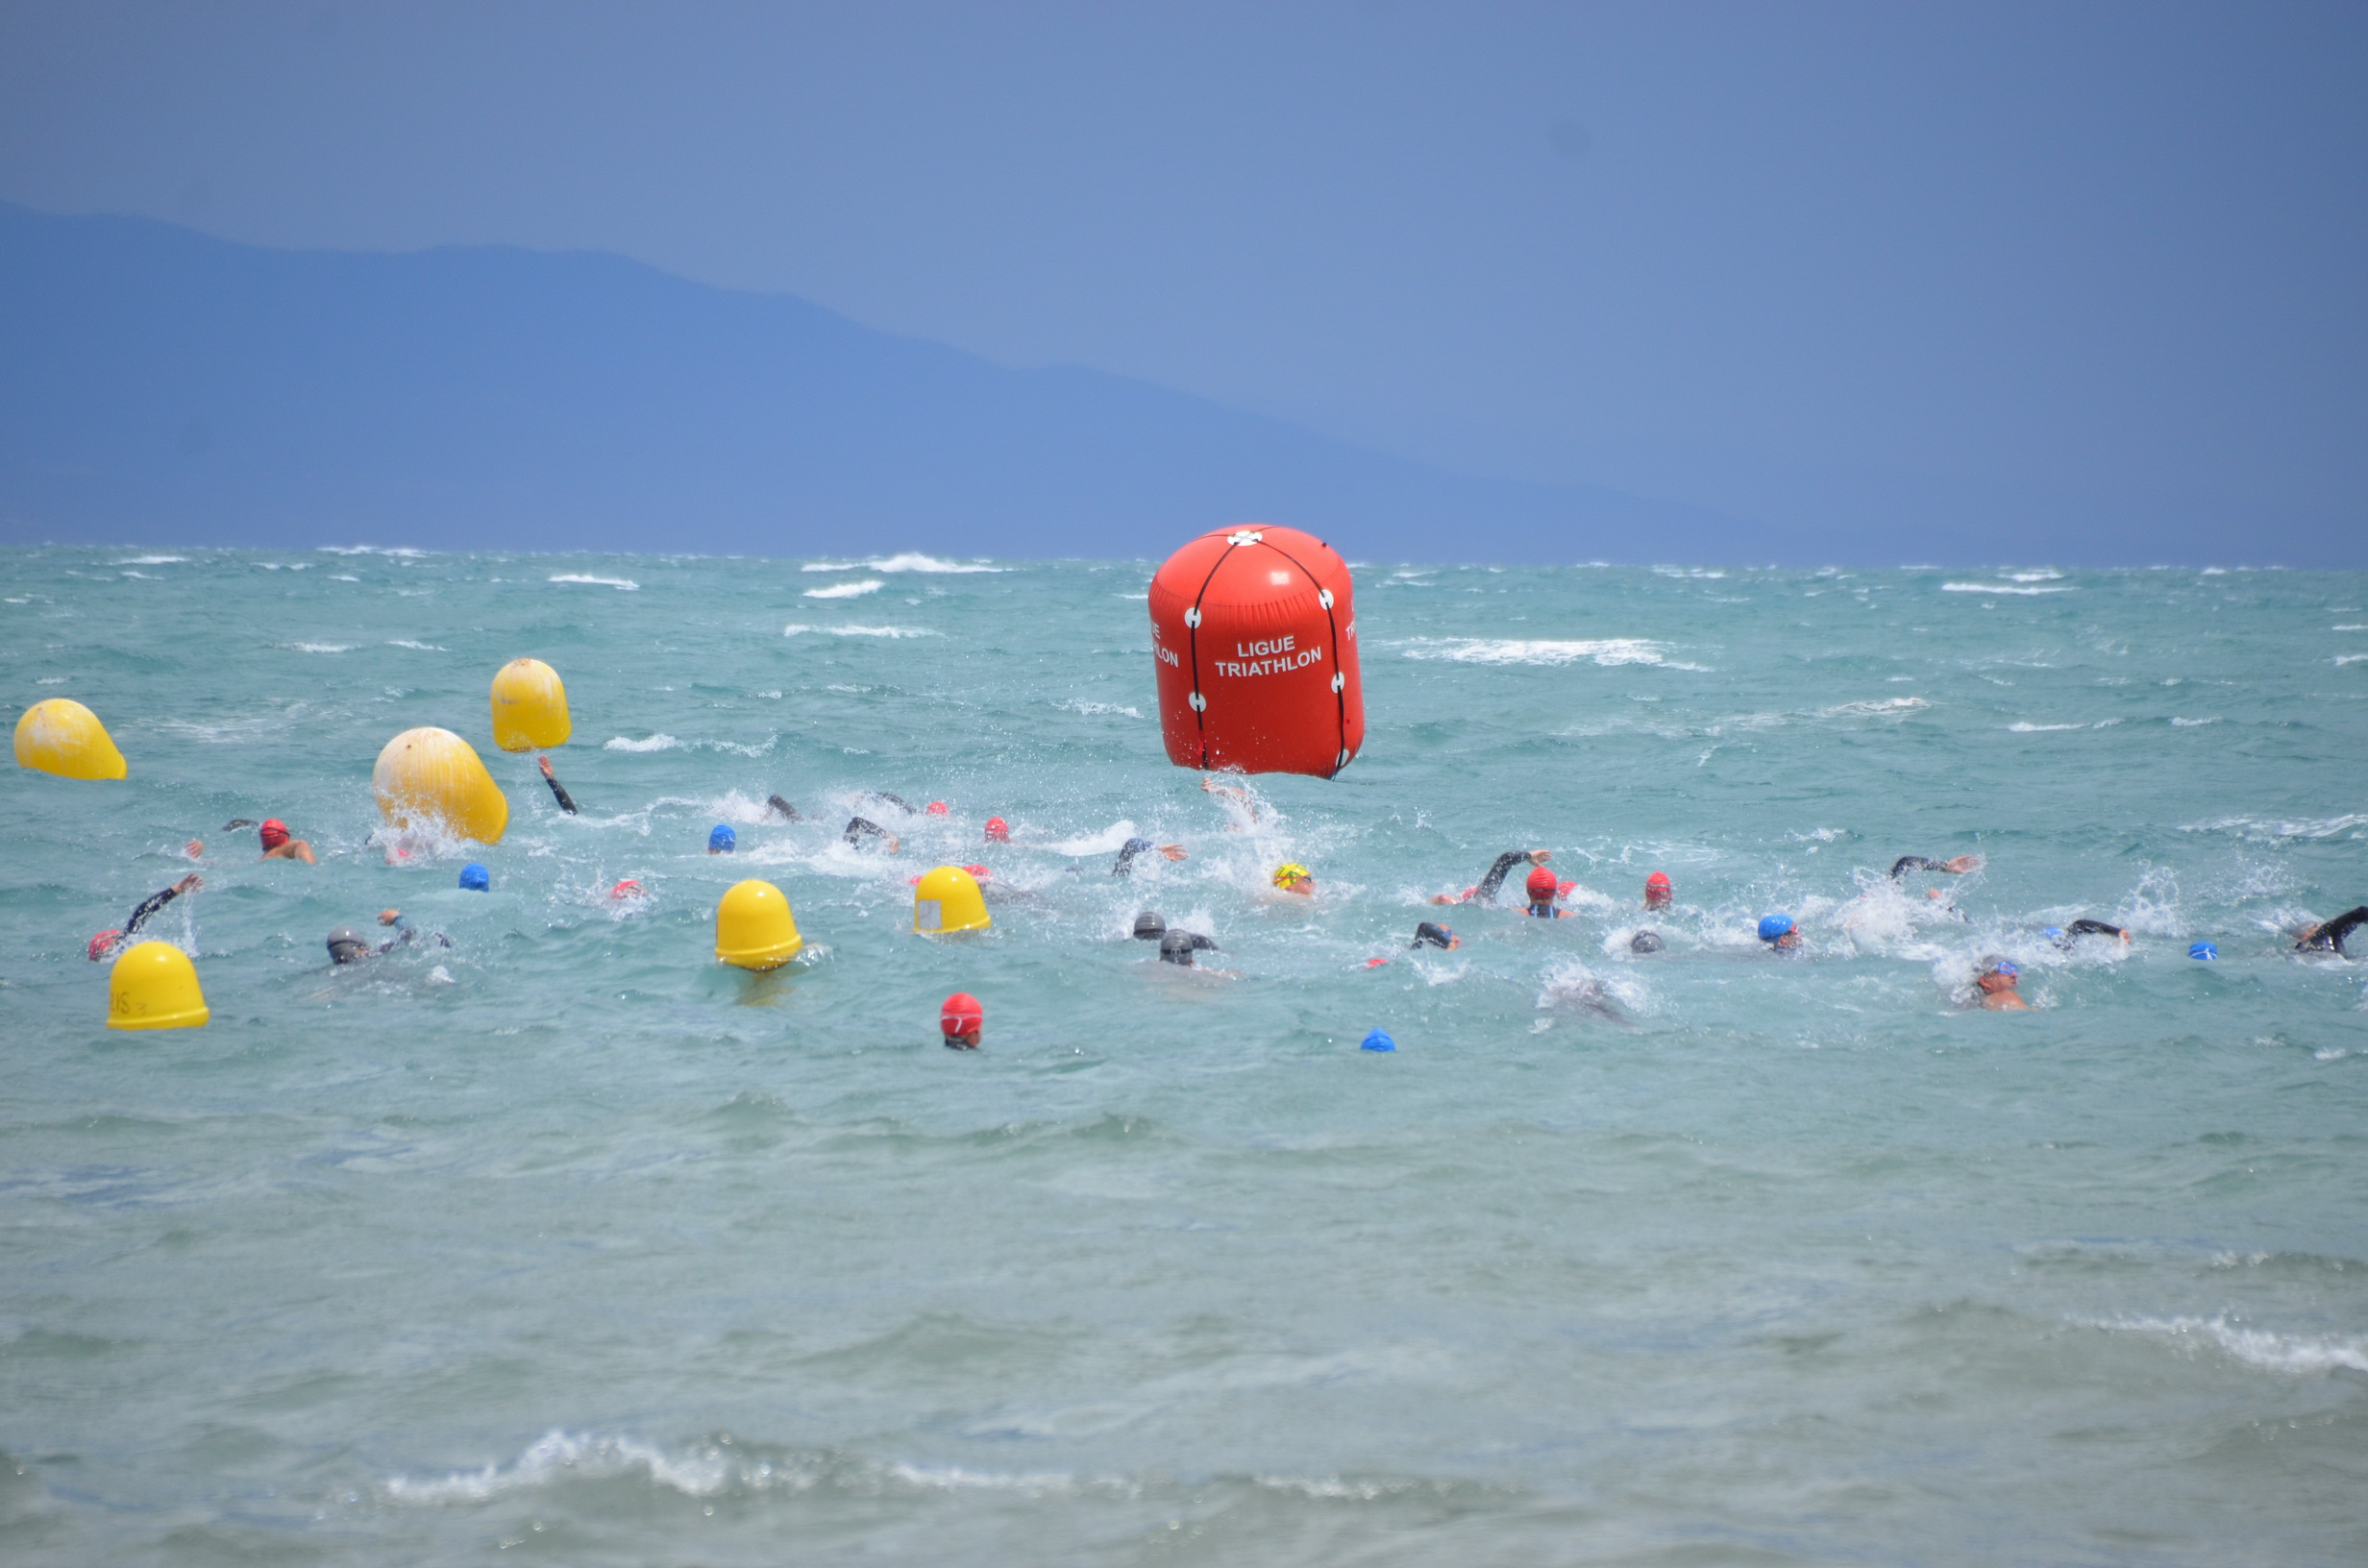 Aquaroc d’Antibes: aquathlon qualificatif pour les championnats de France jeunes